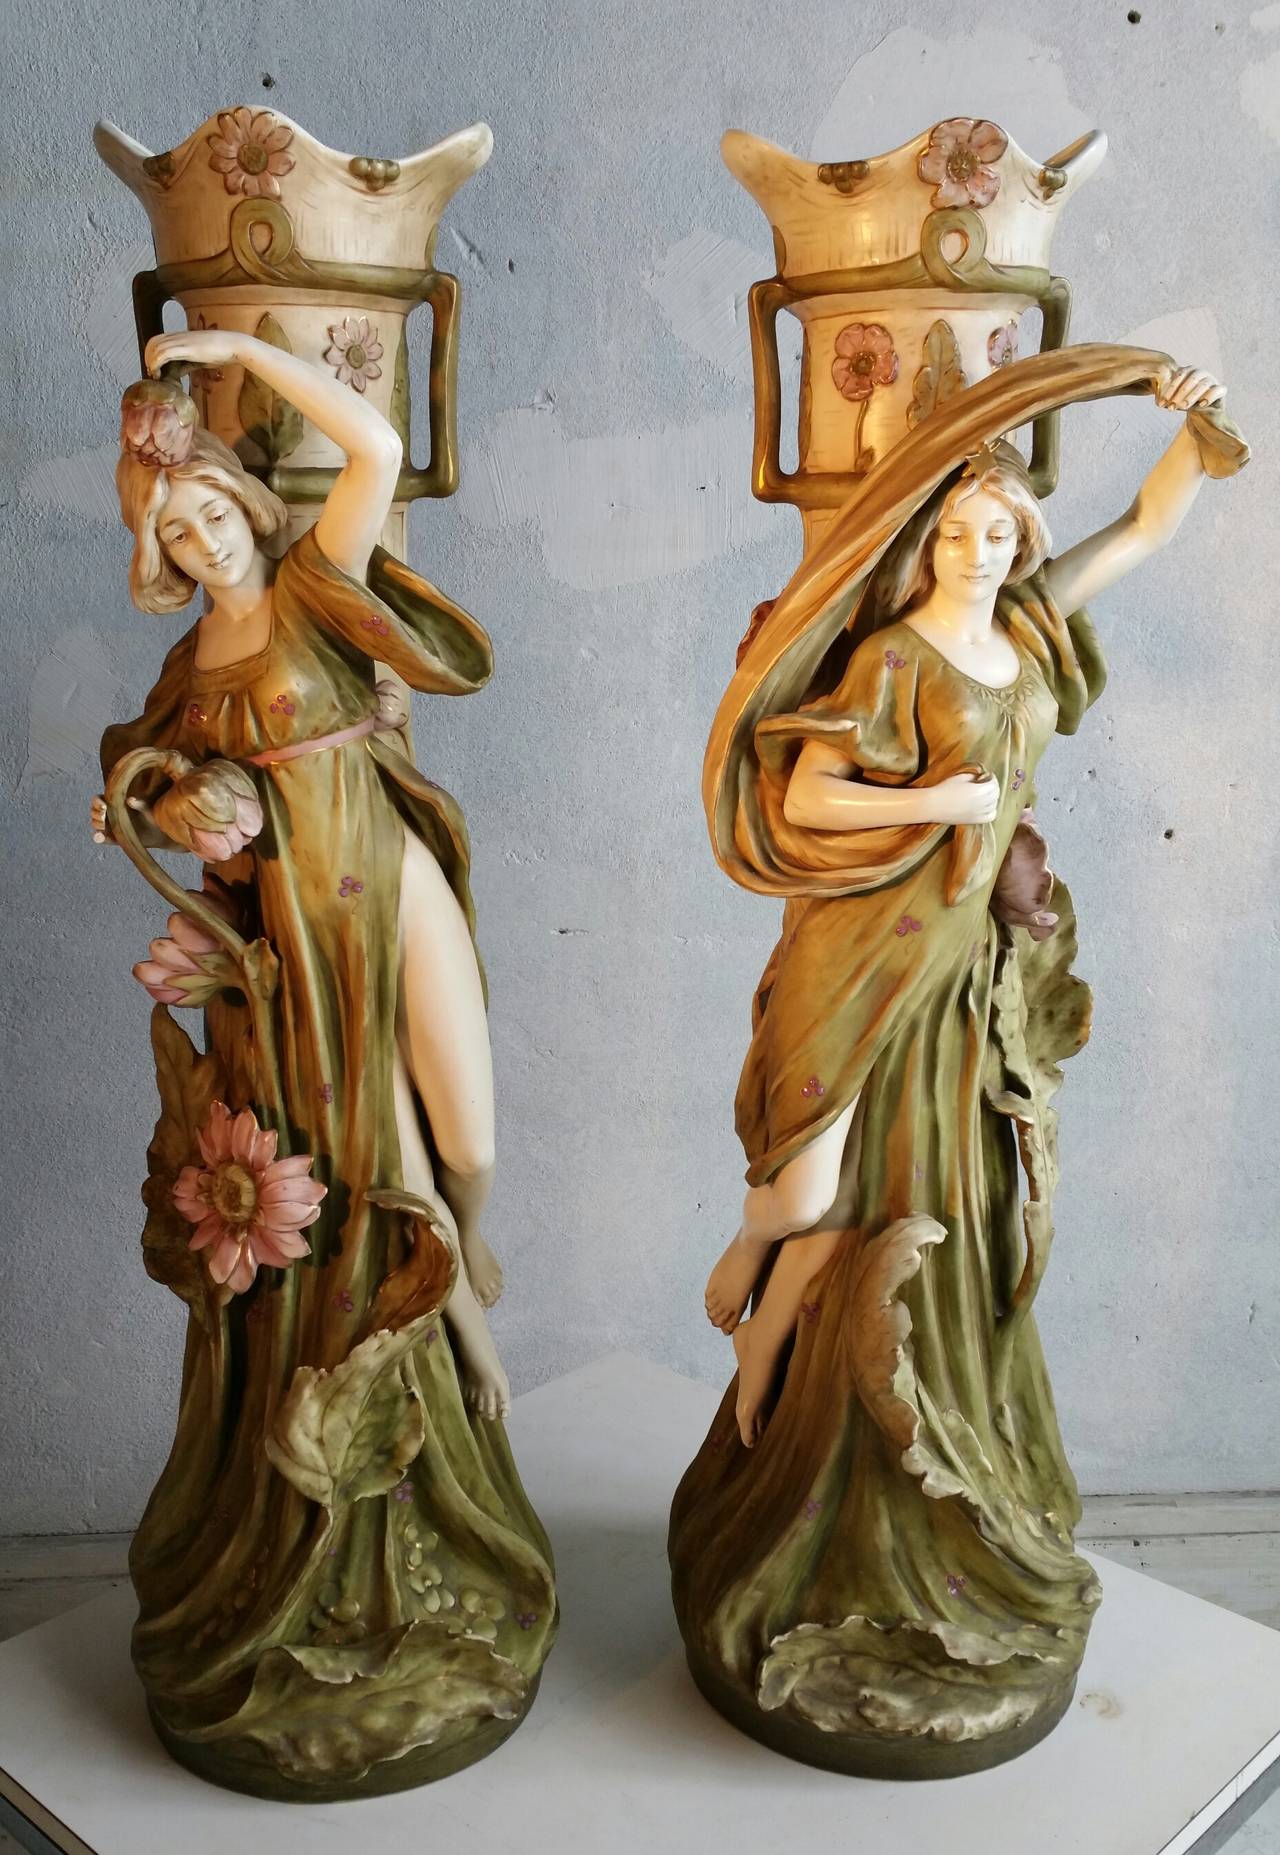 Hugh Monumental Art Nouveau Pair of Figural Jardiniers..by Amphora Teplitz..1900-1910,, Amazing design,,this circa early 20th century Austrian art pottery exhibits luxurious decorative female figures,,  40